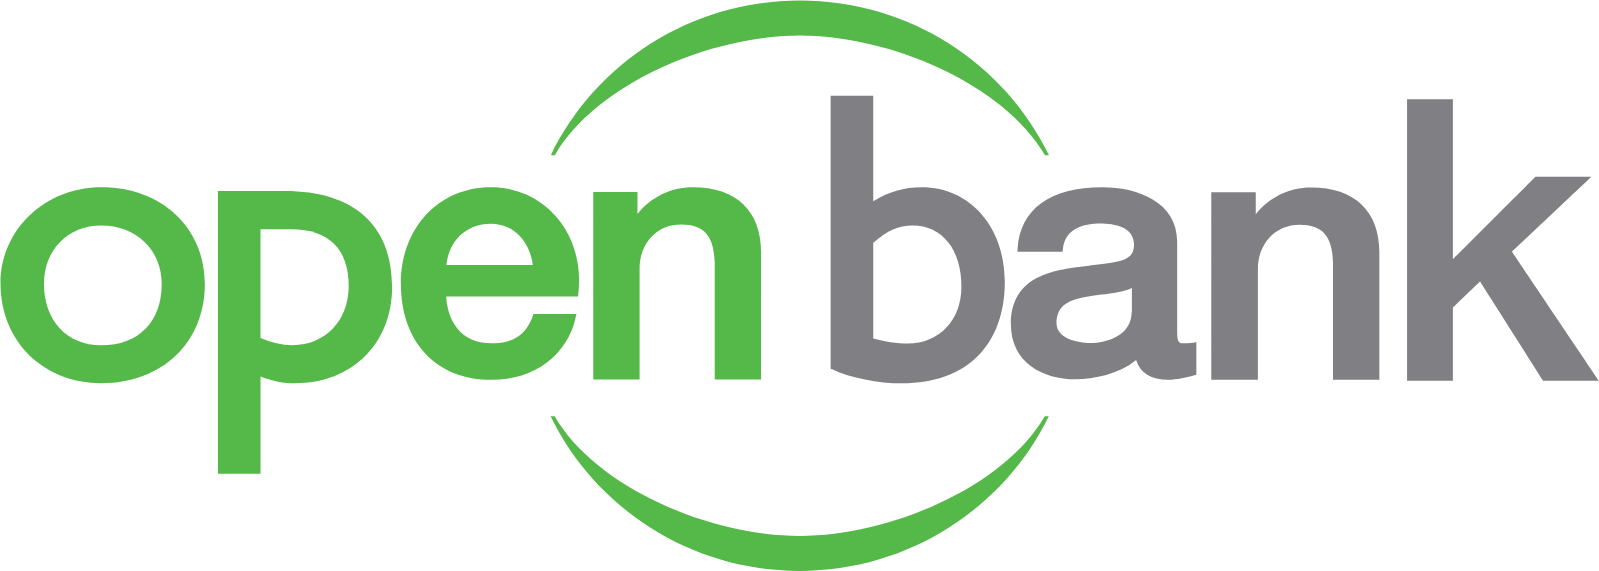 OP Bancorp (Open Bank) logo (PNG transparent)